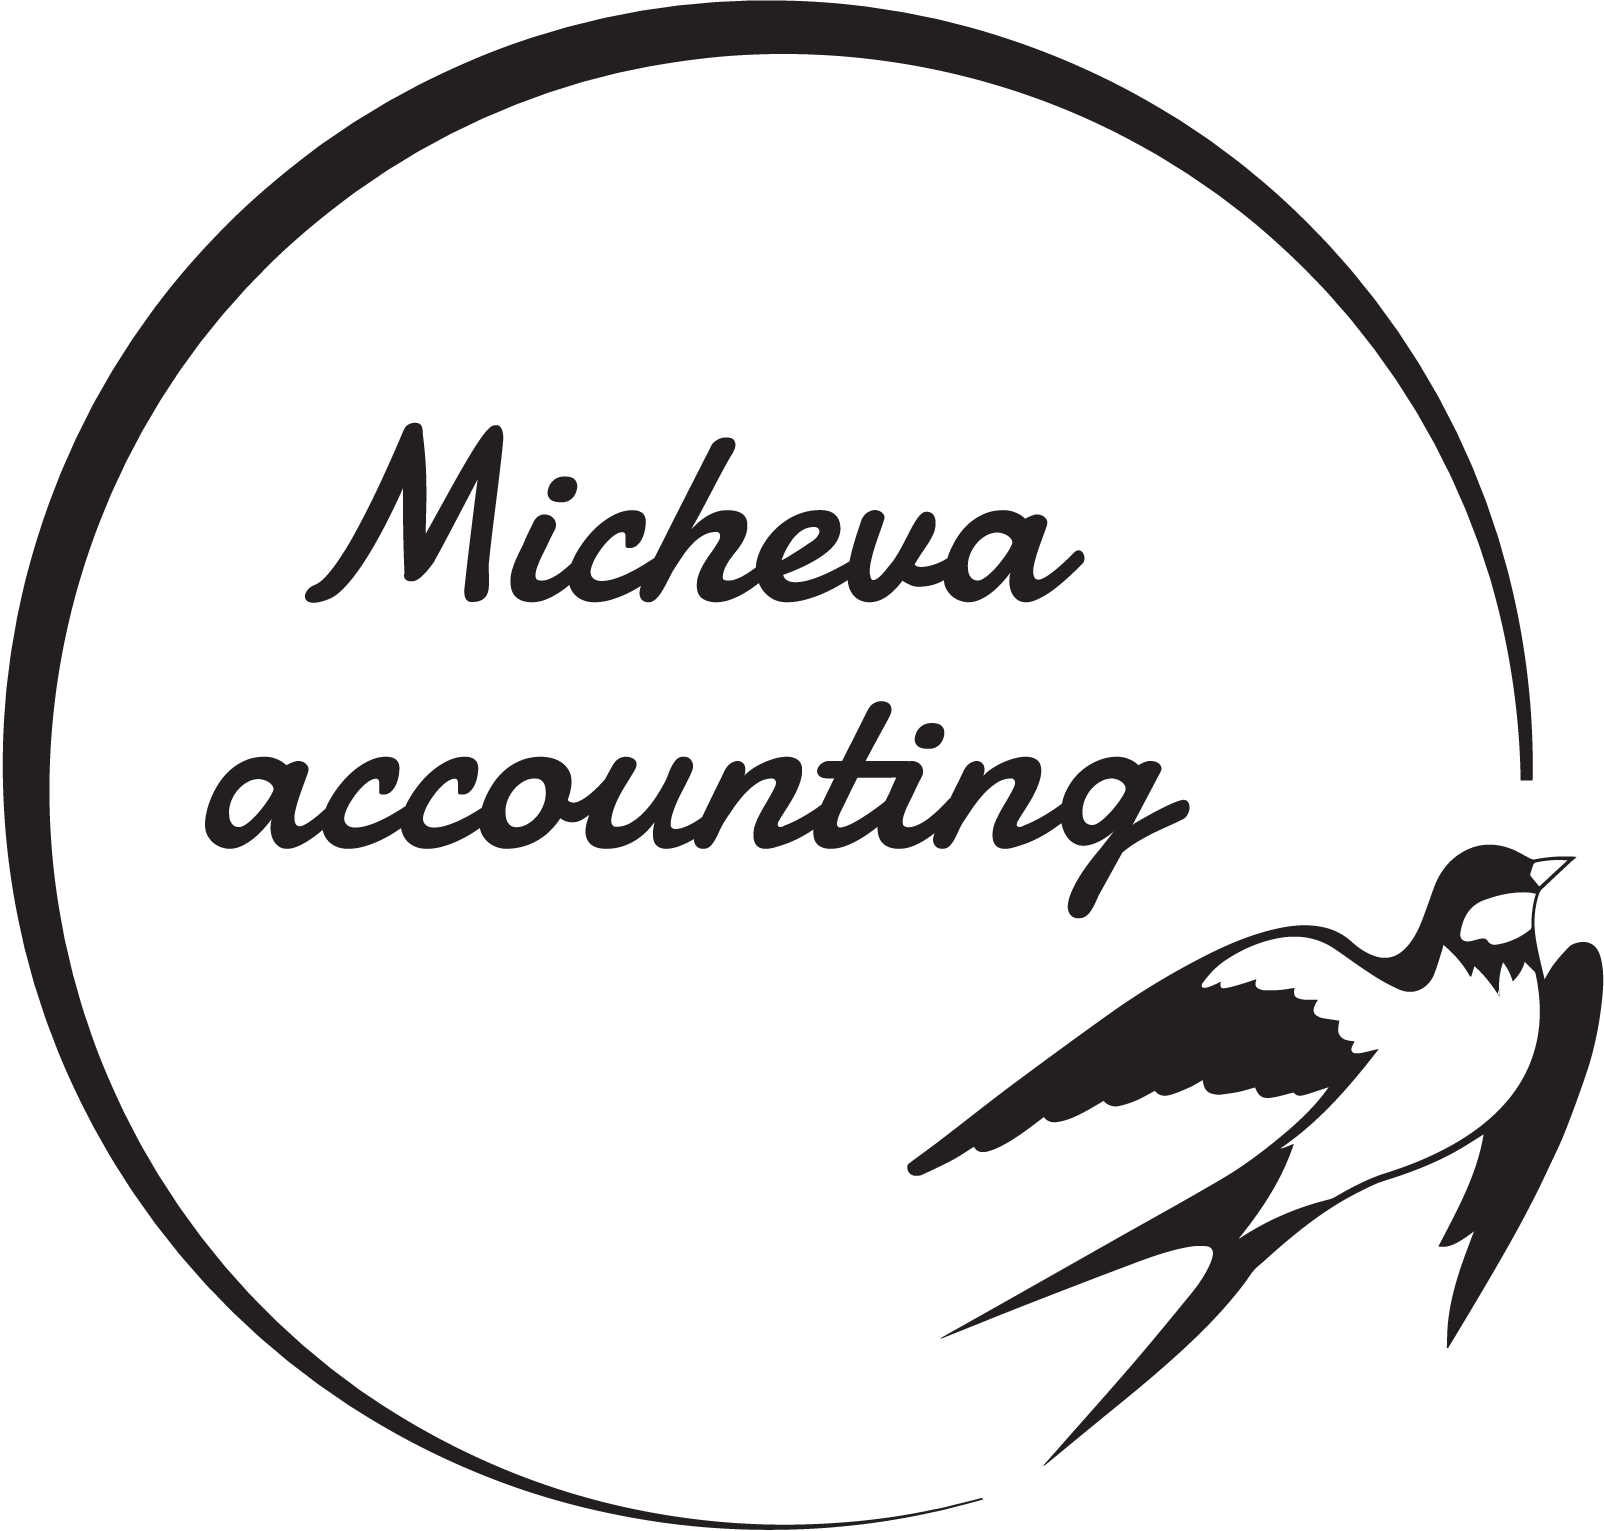 Micheva accounting sro logo